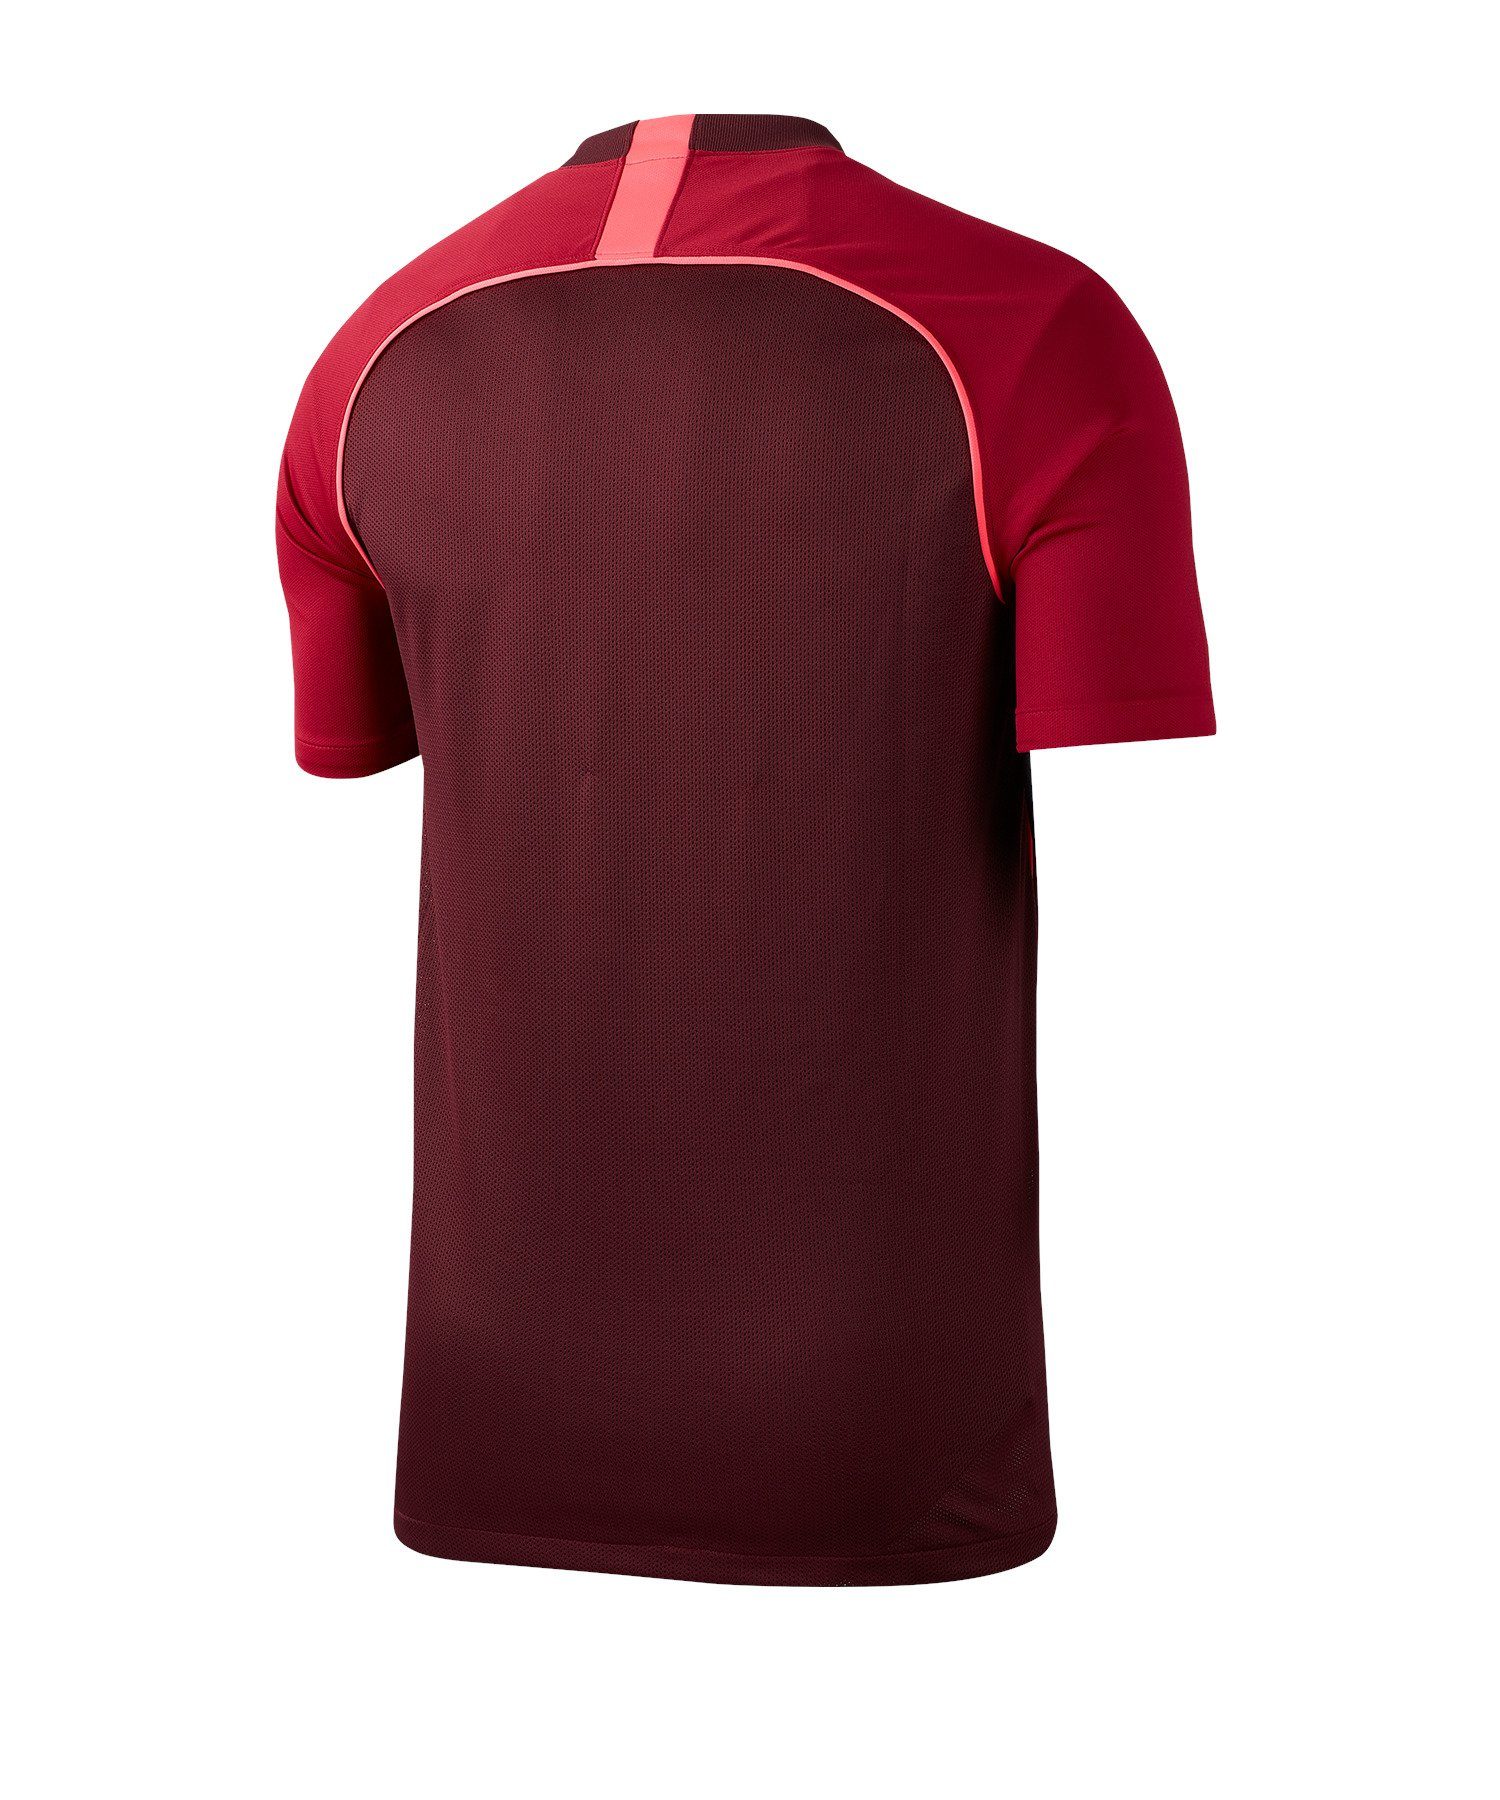 F.C. default T-Shirt kurzarm Nike Soccer rot Home Sportswear Trikot